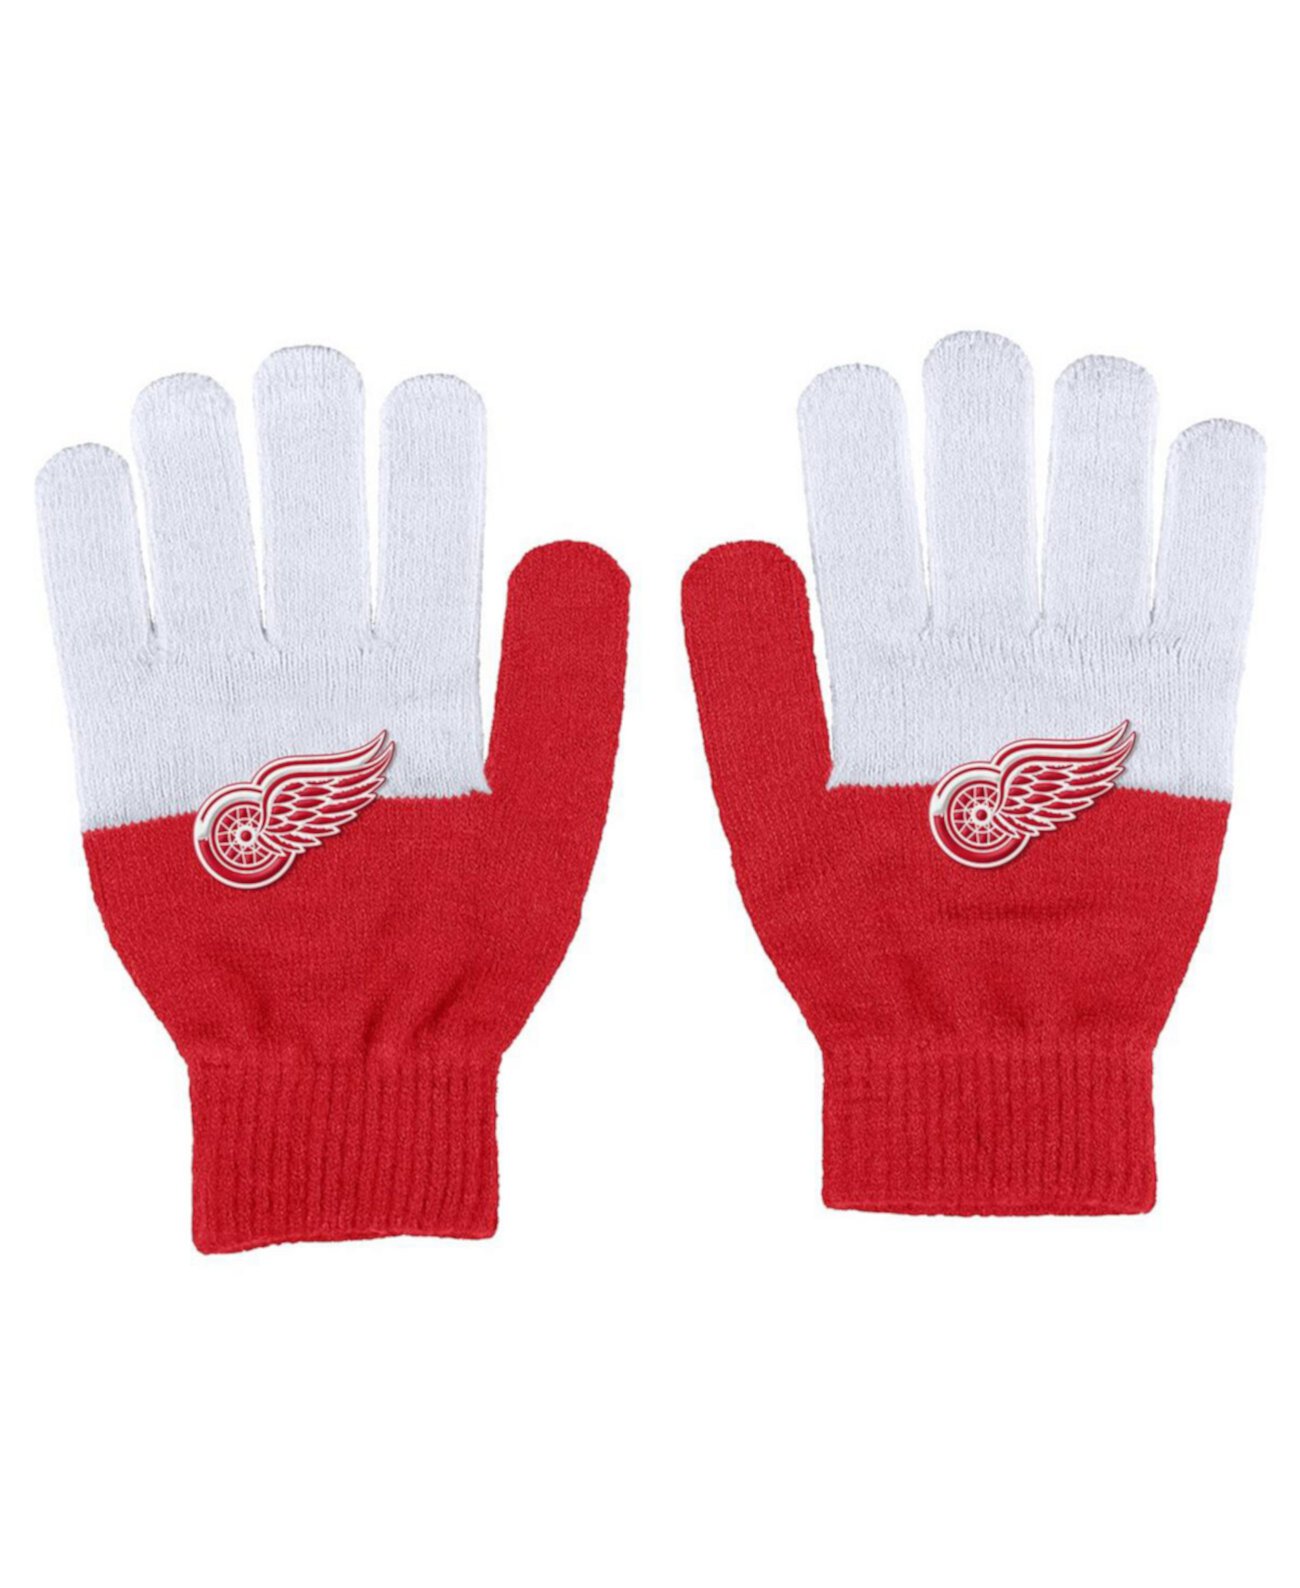 Женские перчатки Detroit Red Wings в стиле колор-блок WEAR by Erin Andrews